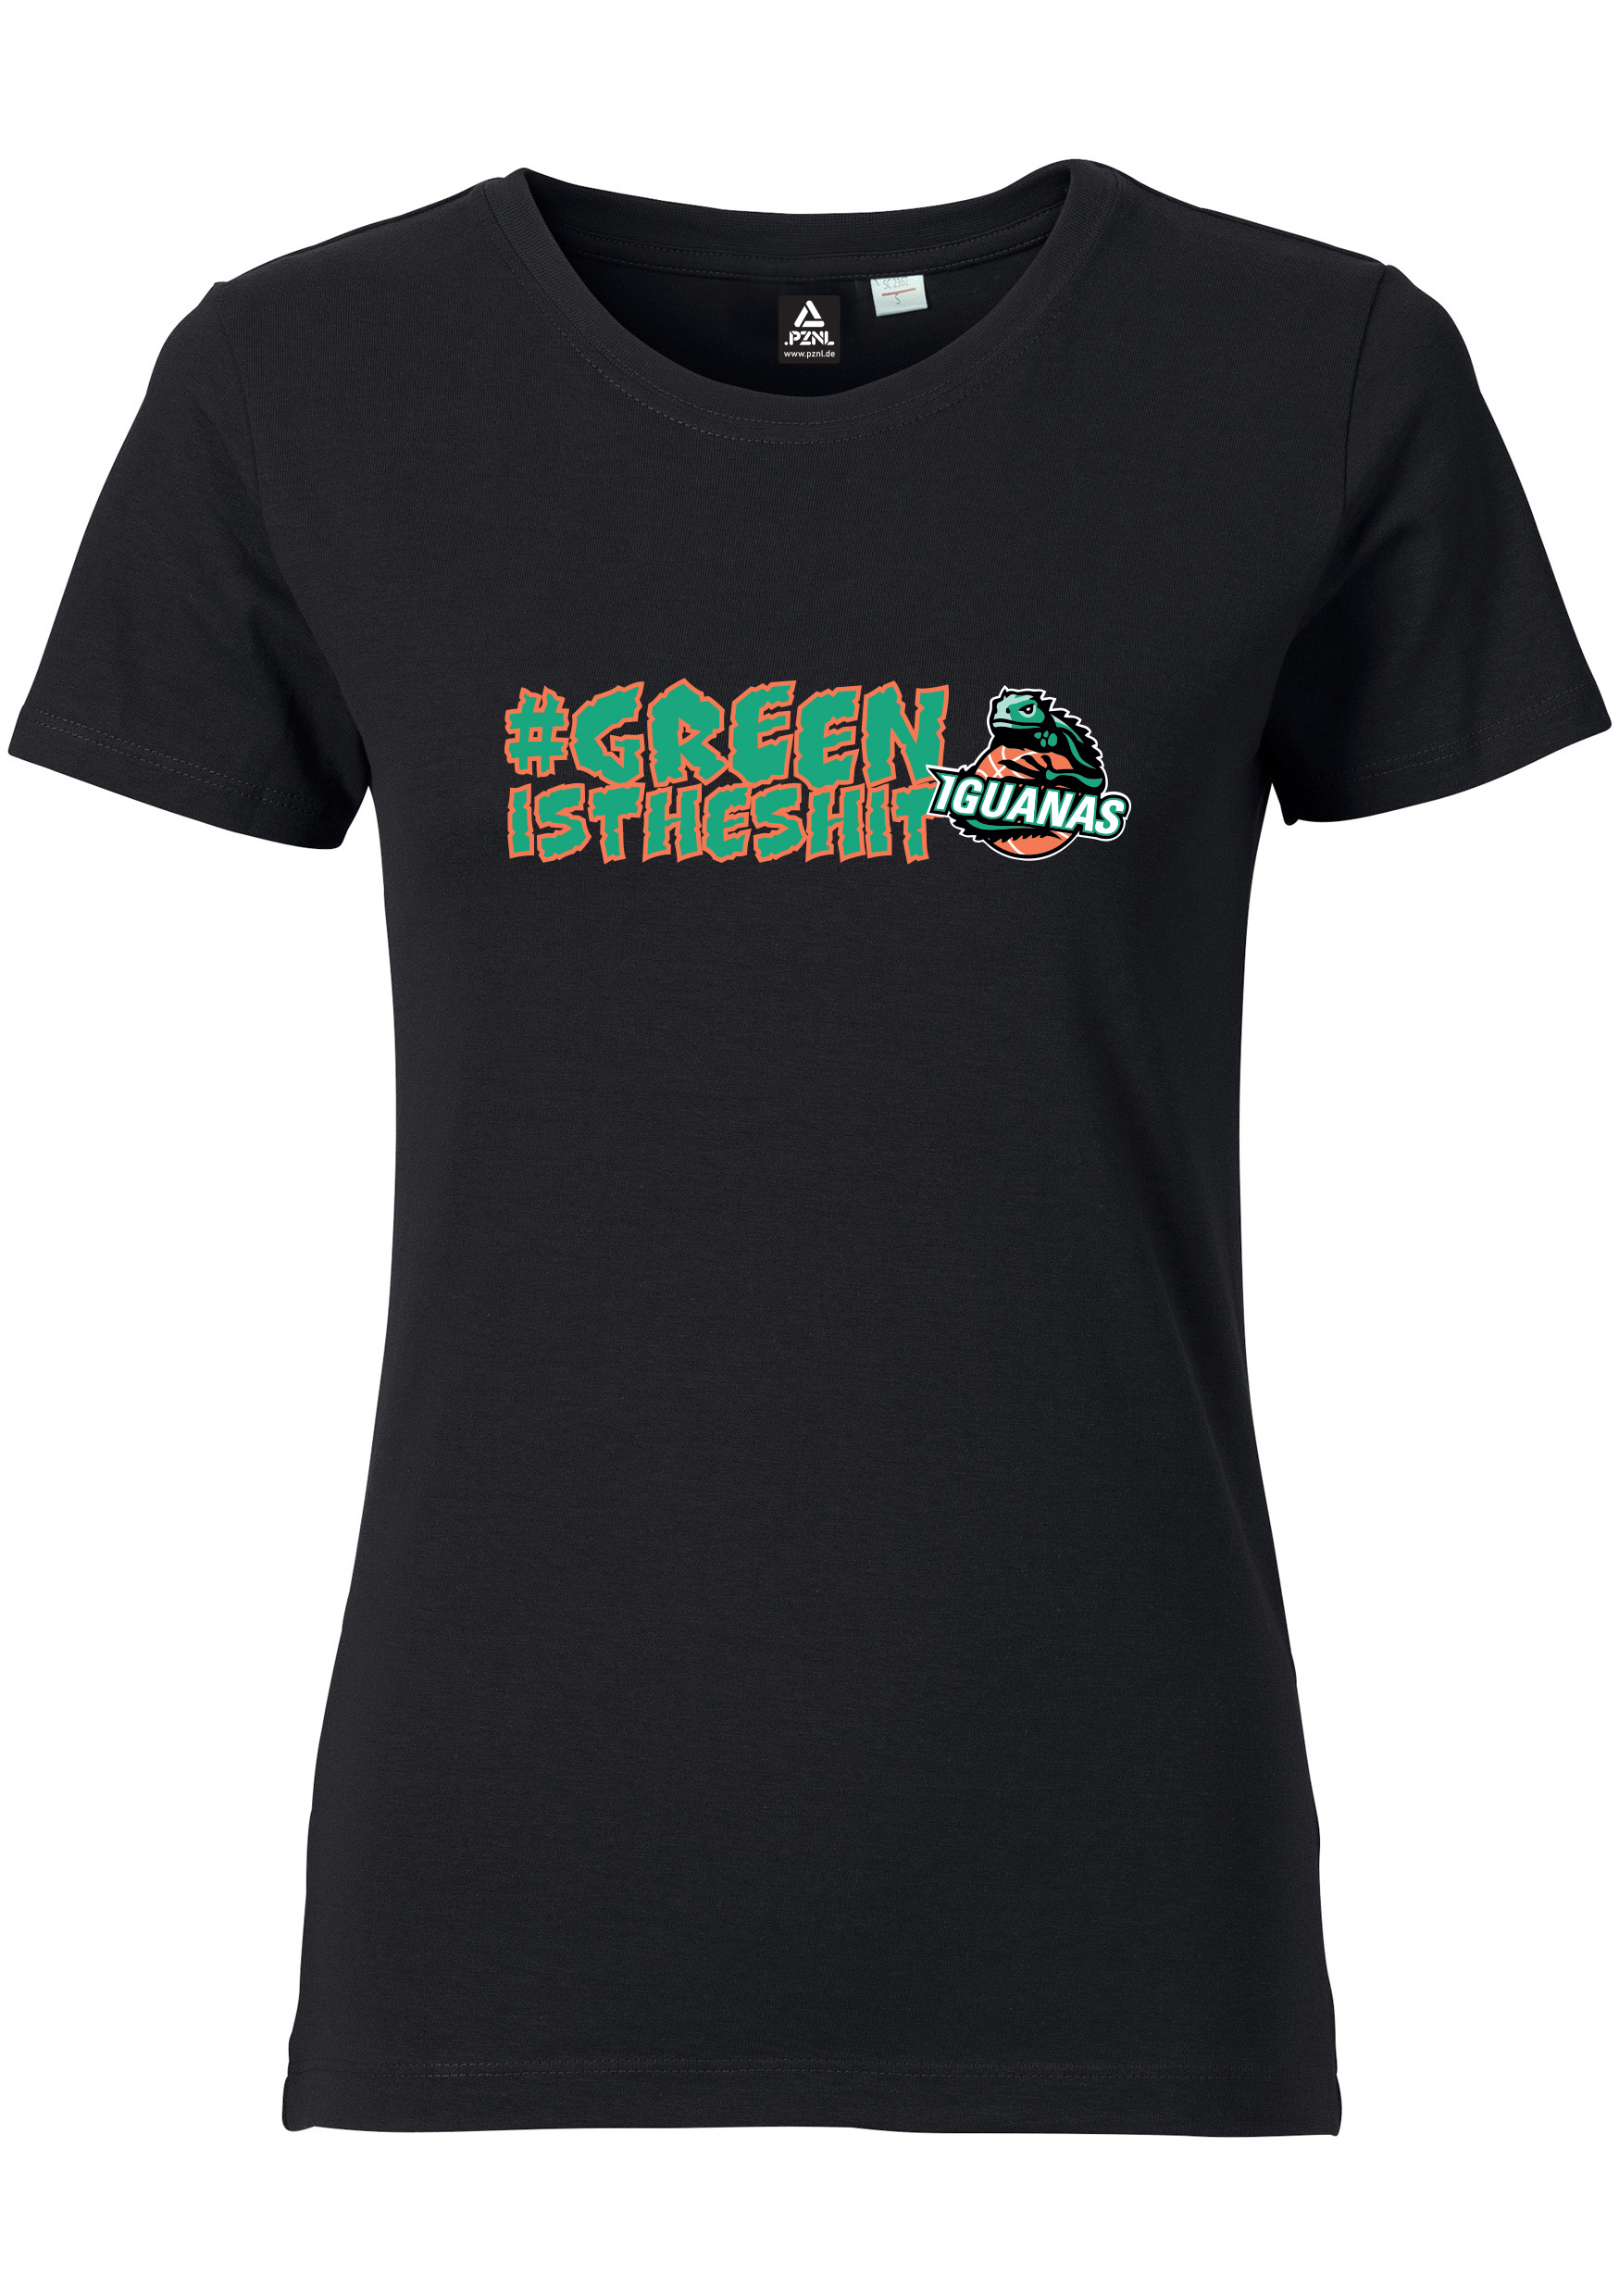 Iguanas T-Shirt Damen #greenistheshit